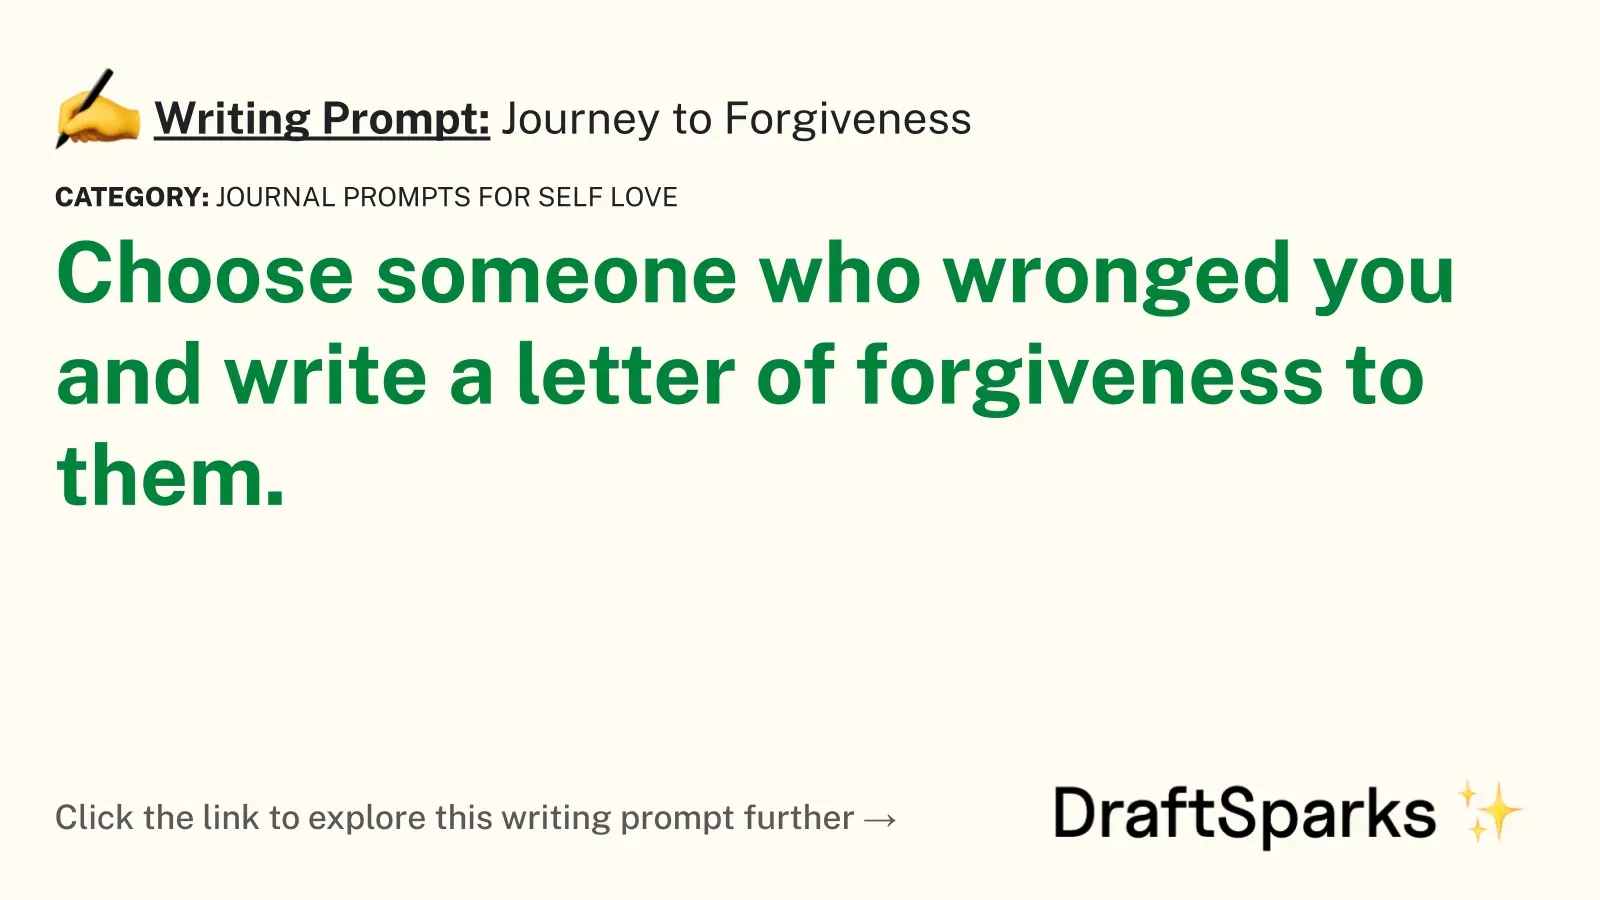 Journey to Forgiveness